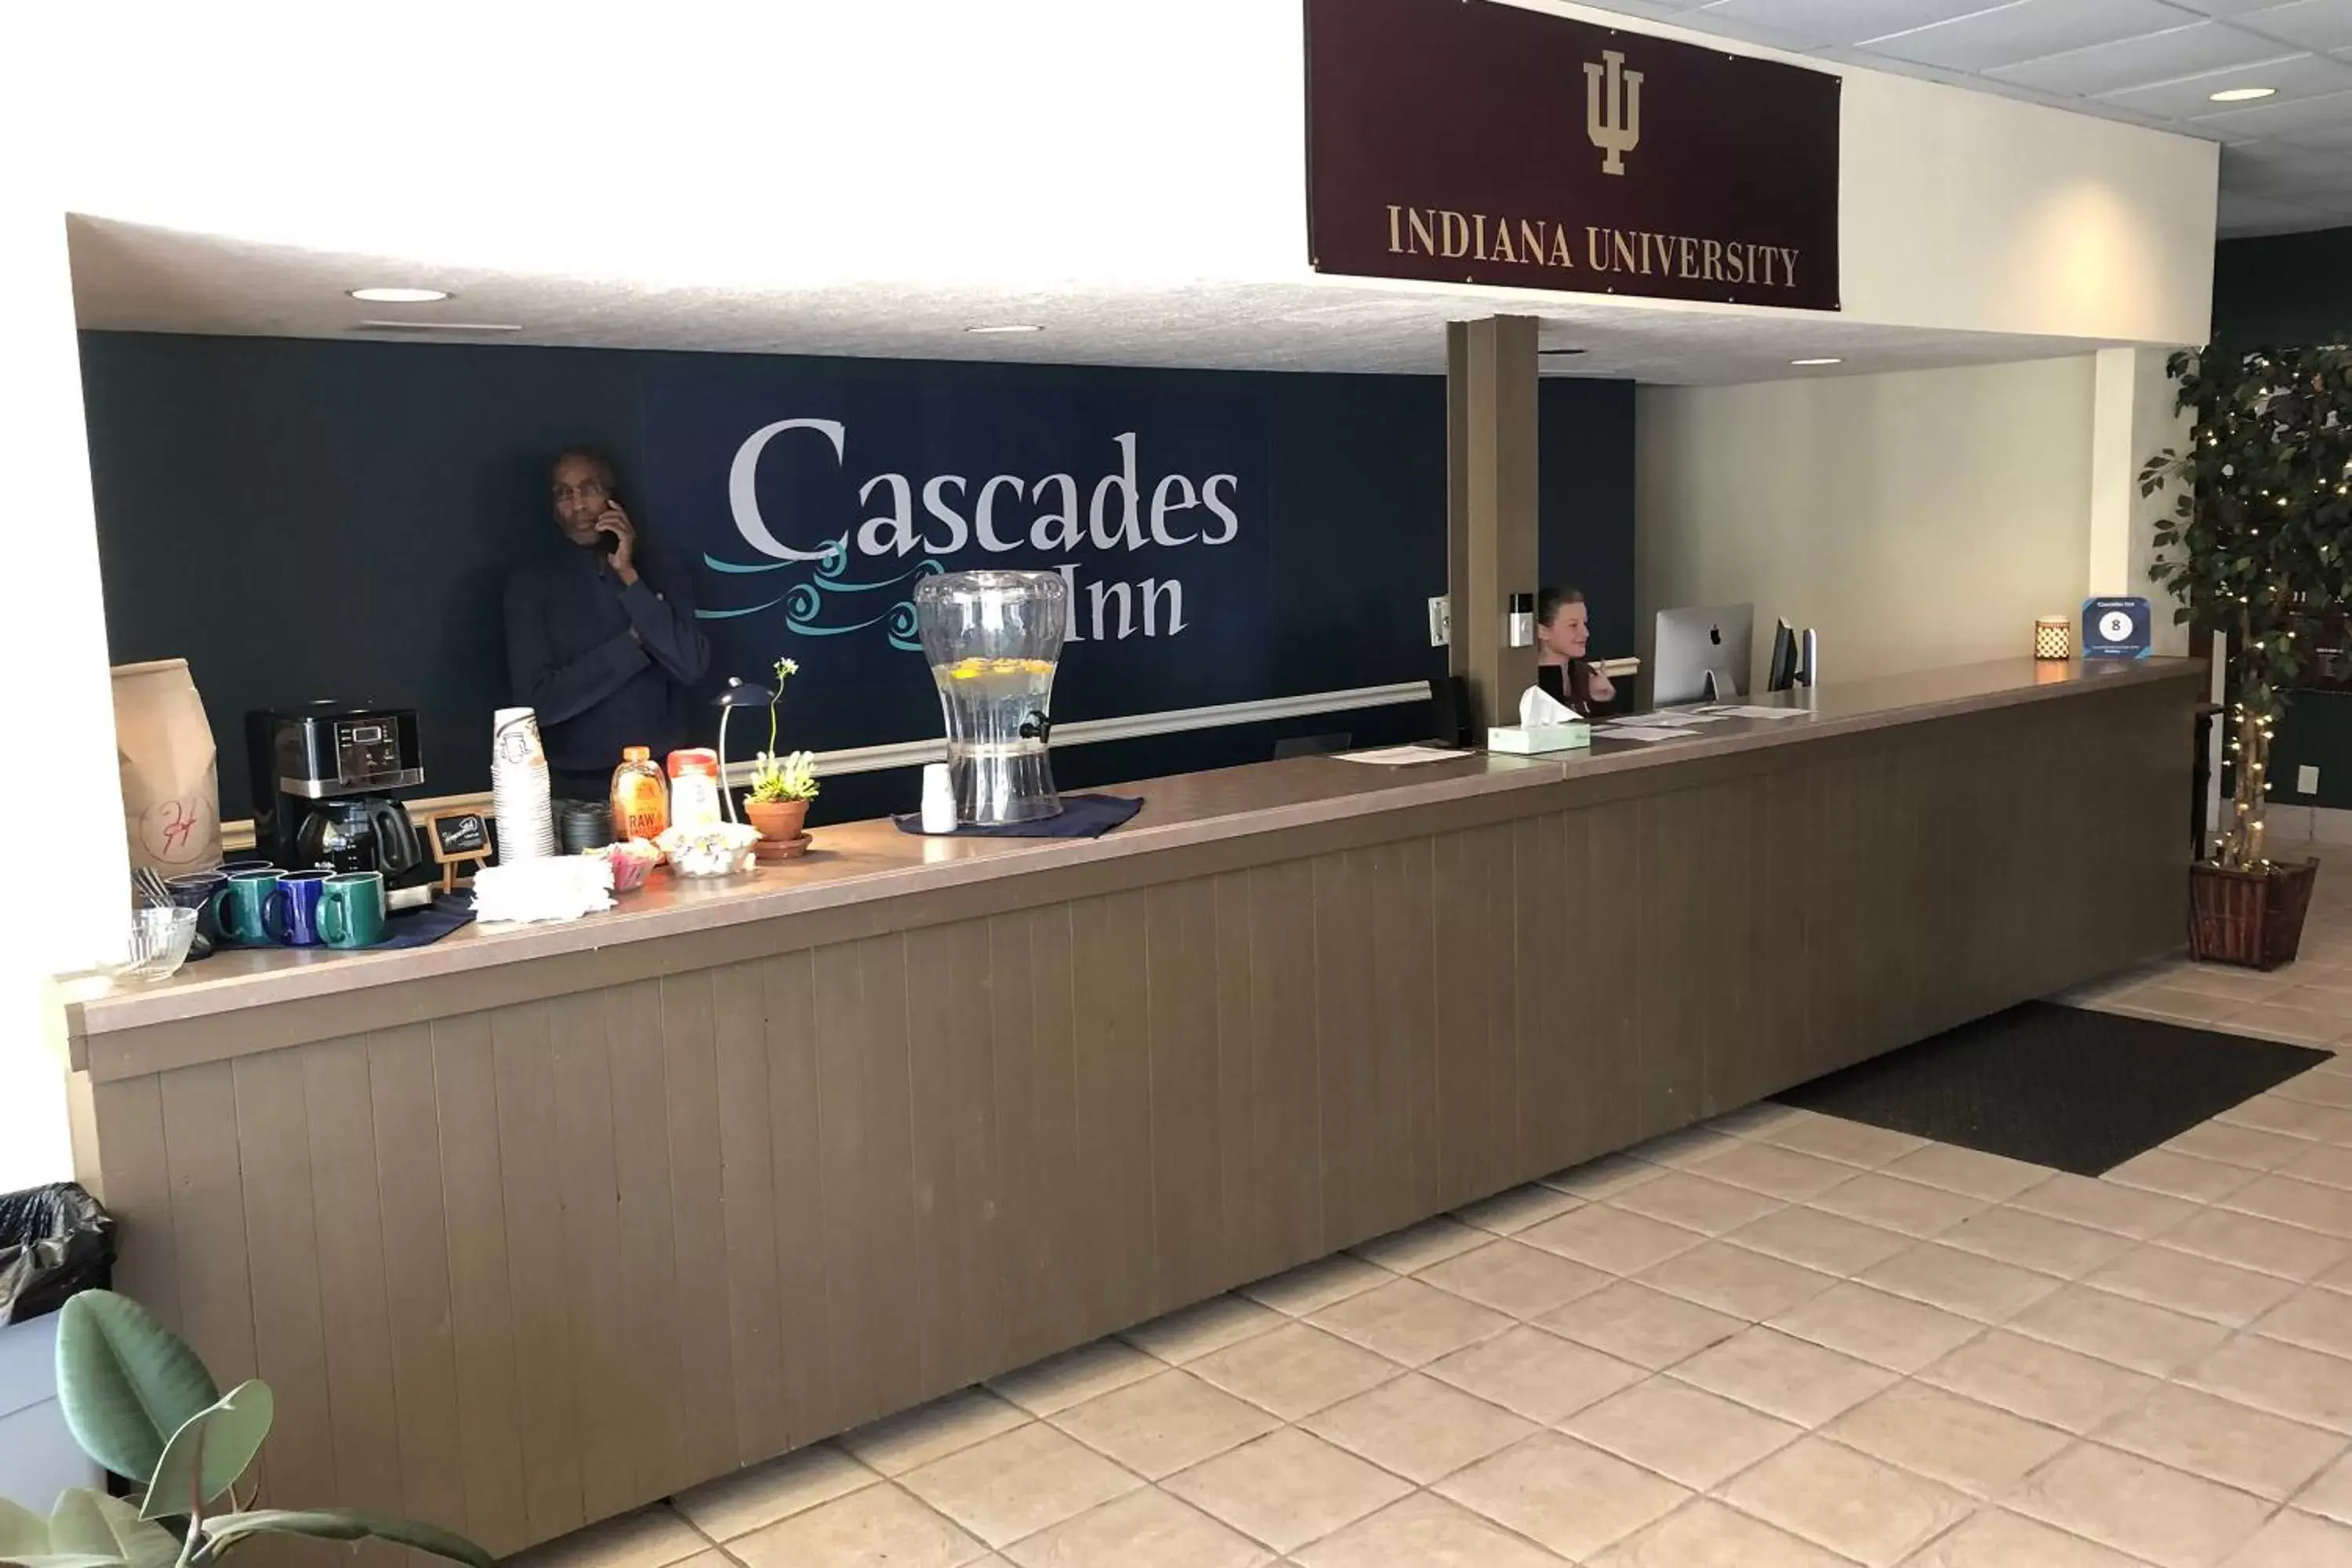 Staff in Cascades Inn